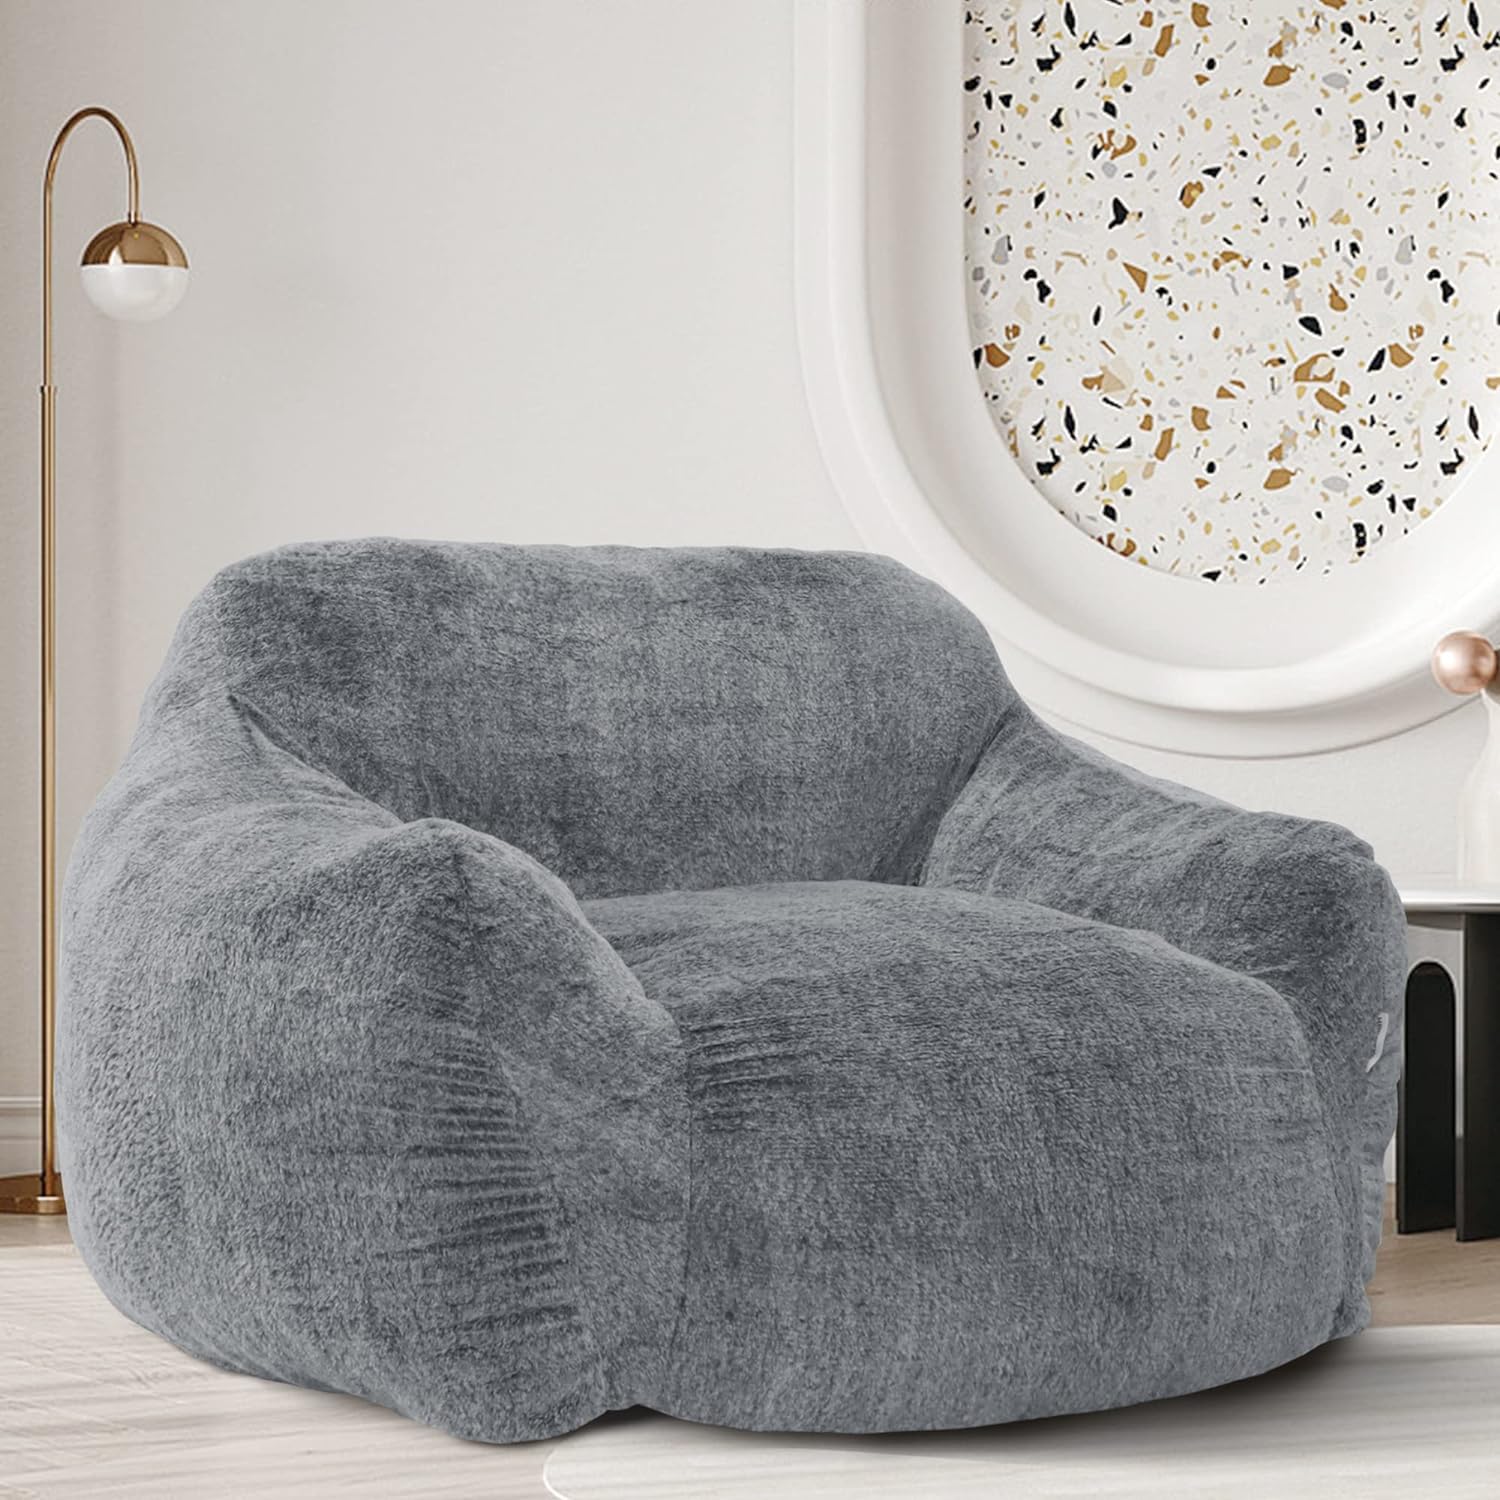 Homguava Giant Bean Bag Chair,Bean Bag Sofa Chair with Armrests, Bean Bag Couch Stuffed High-Density Foam